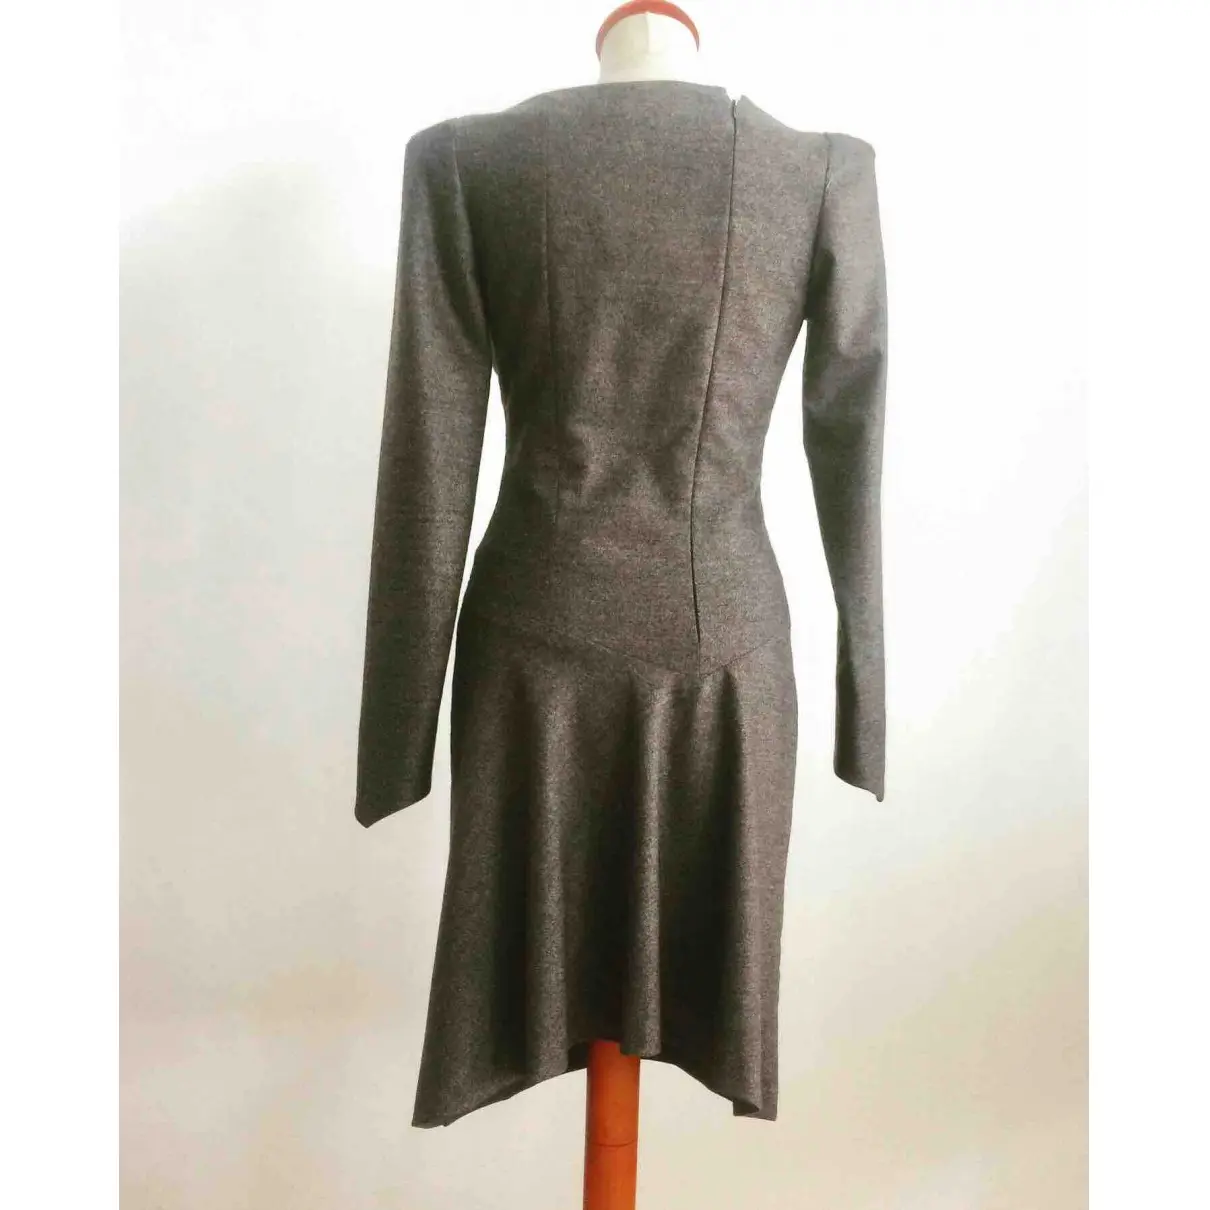 Guy Laroche Mid-length dress for sale - Vintage